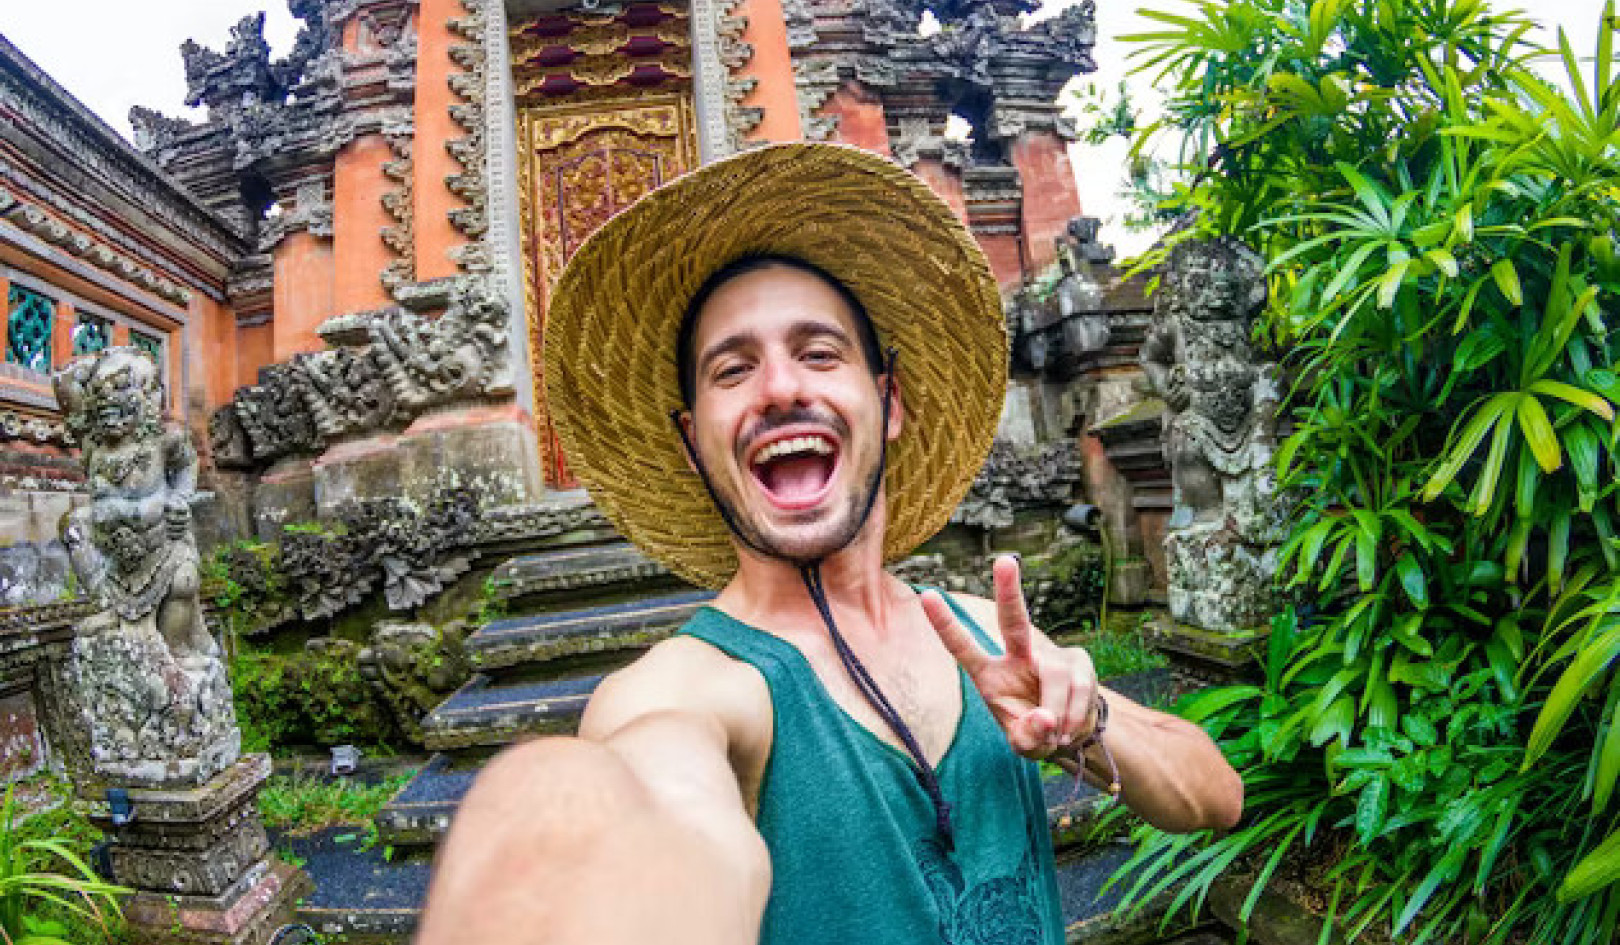 Instagrams innvirkning på turistatferd: Hvordan reise med respekt